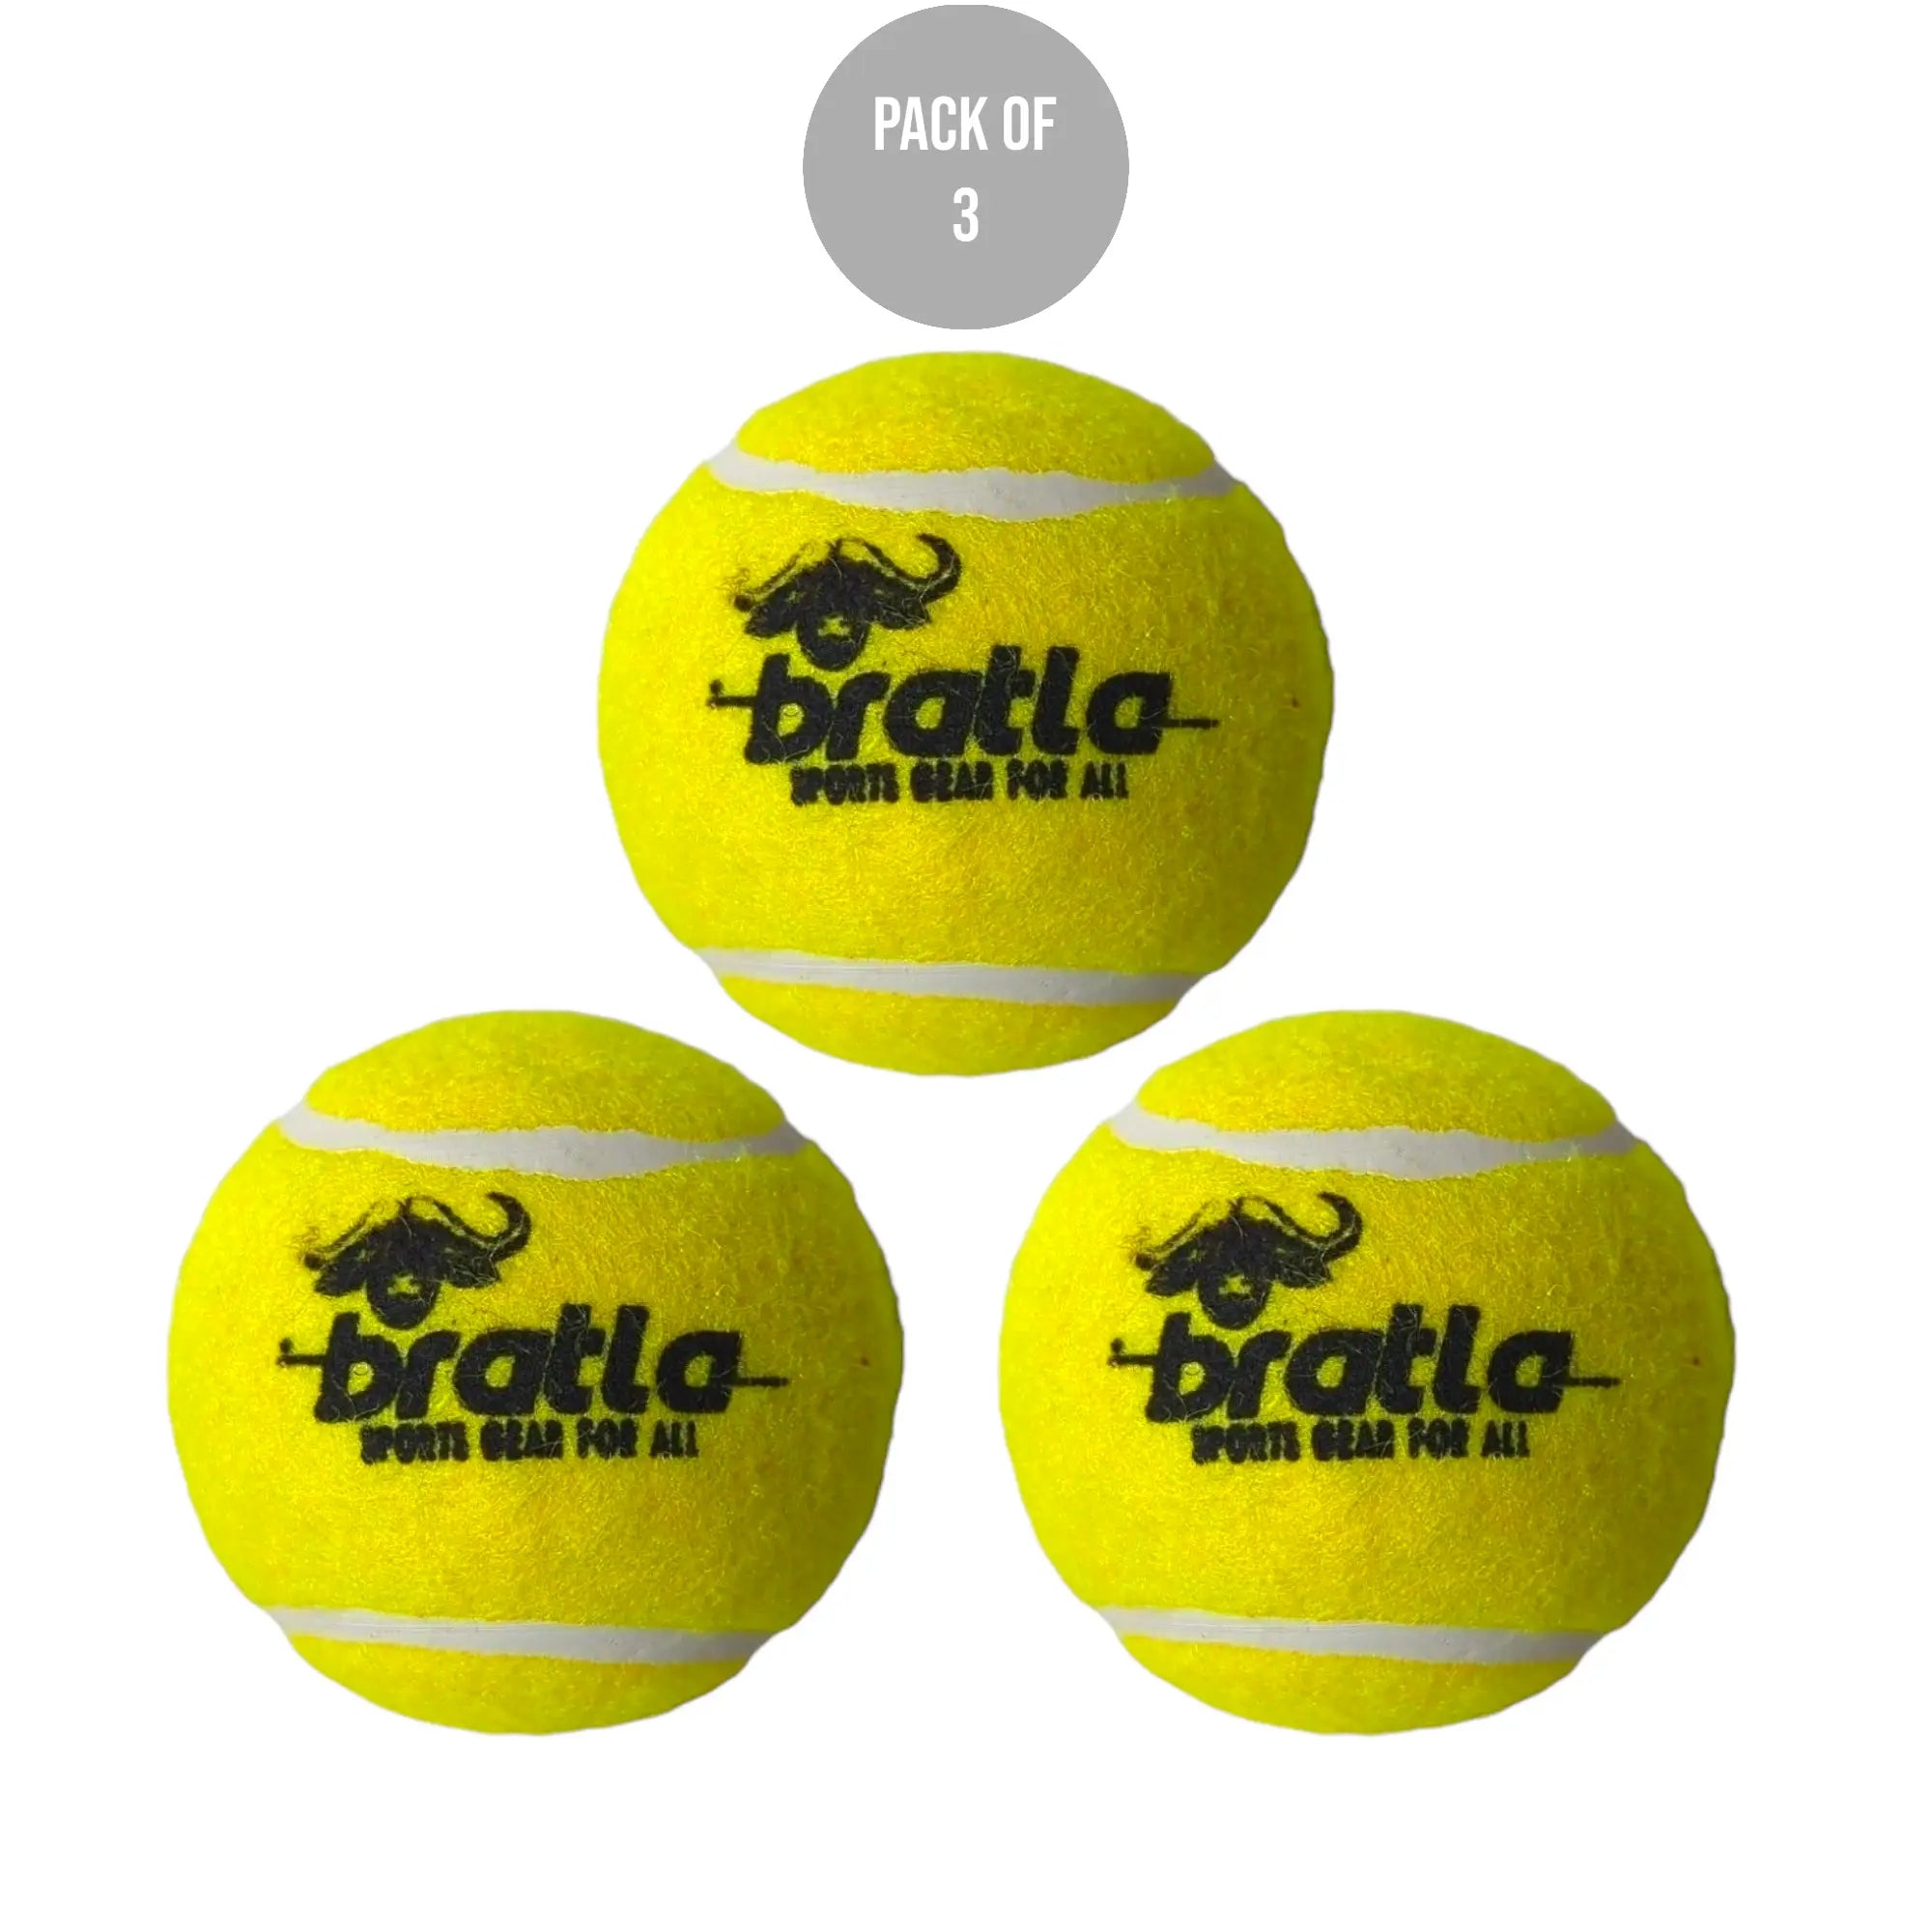 Bratla Pro Cricket Tennis Tape Ball Pack of 3 Lightweight - Pack of 3 - BALL - SOFTBALL